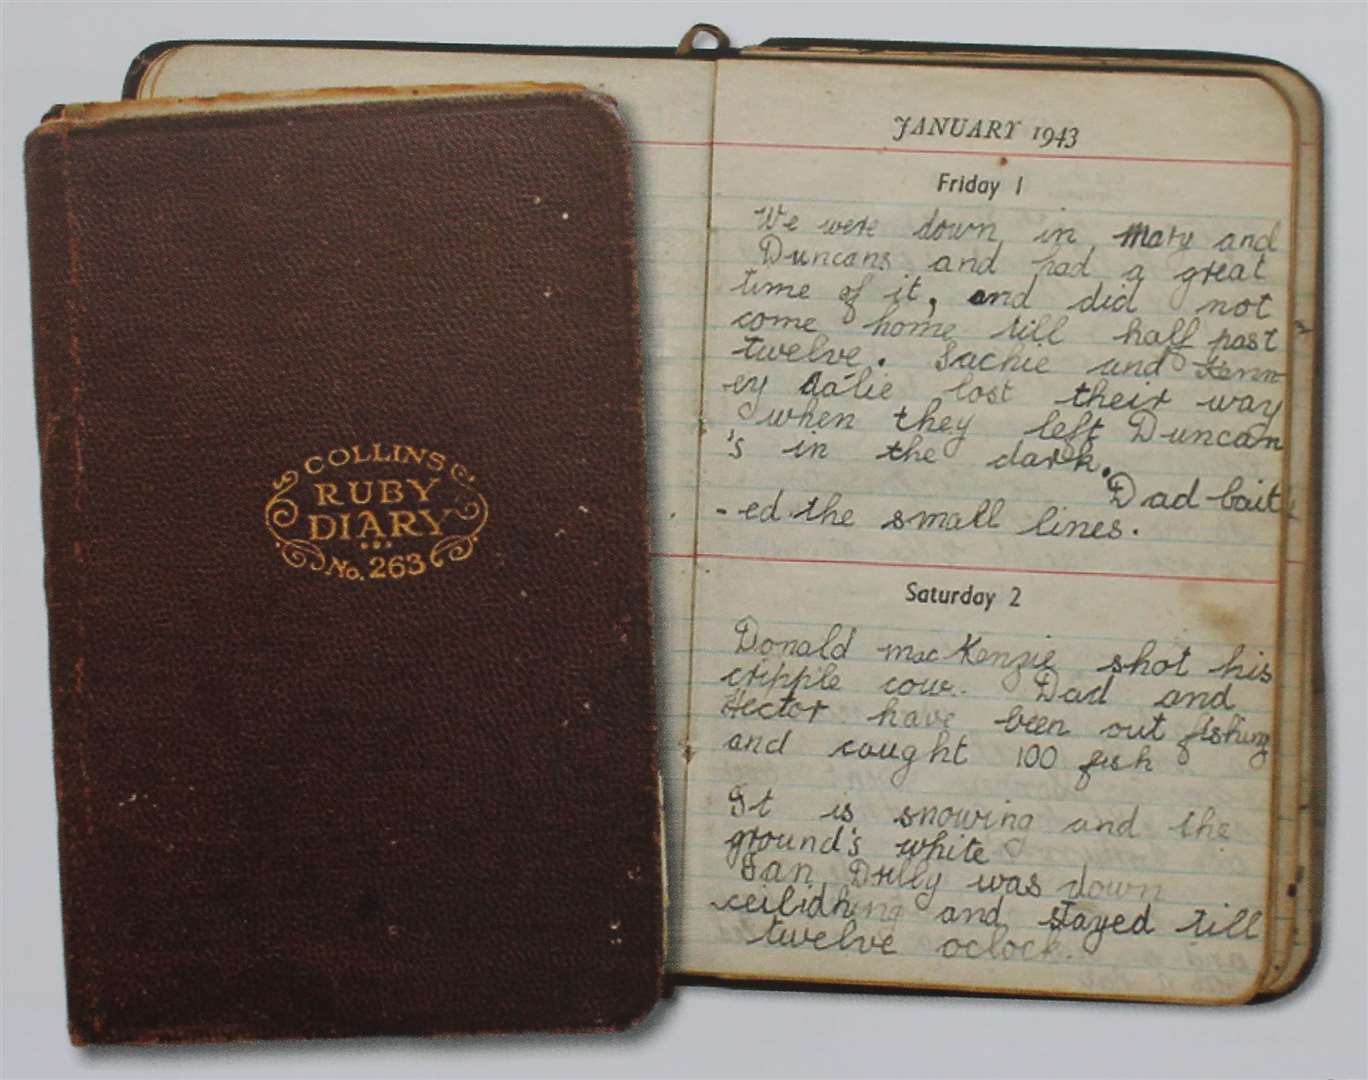 The diary is a precious treasure trove of memories.